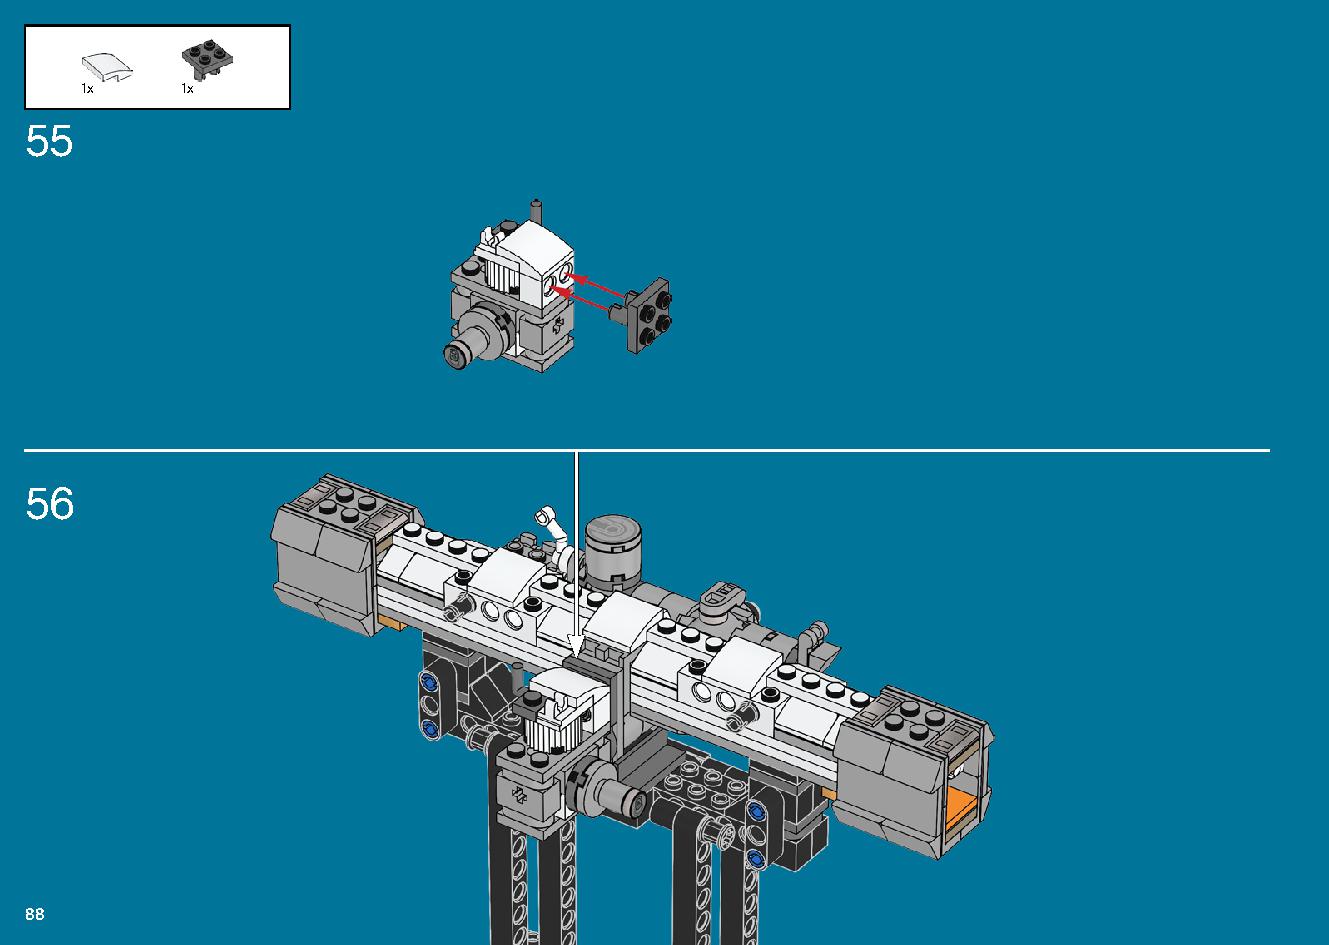 International Space Station 21321 レゴの商品情報 レゴの説明書・組立方法 88 page